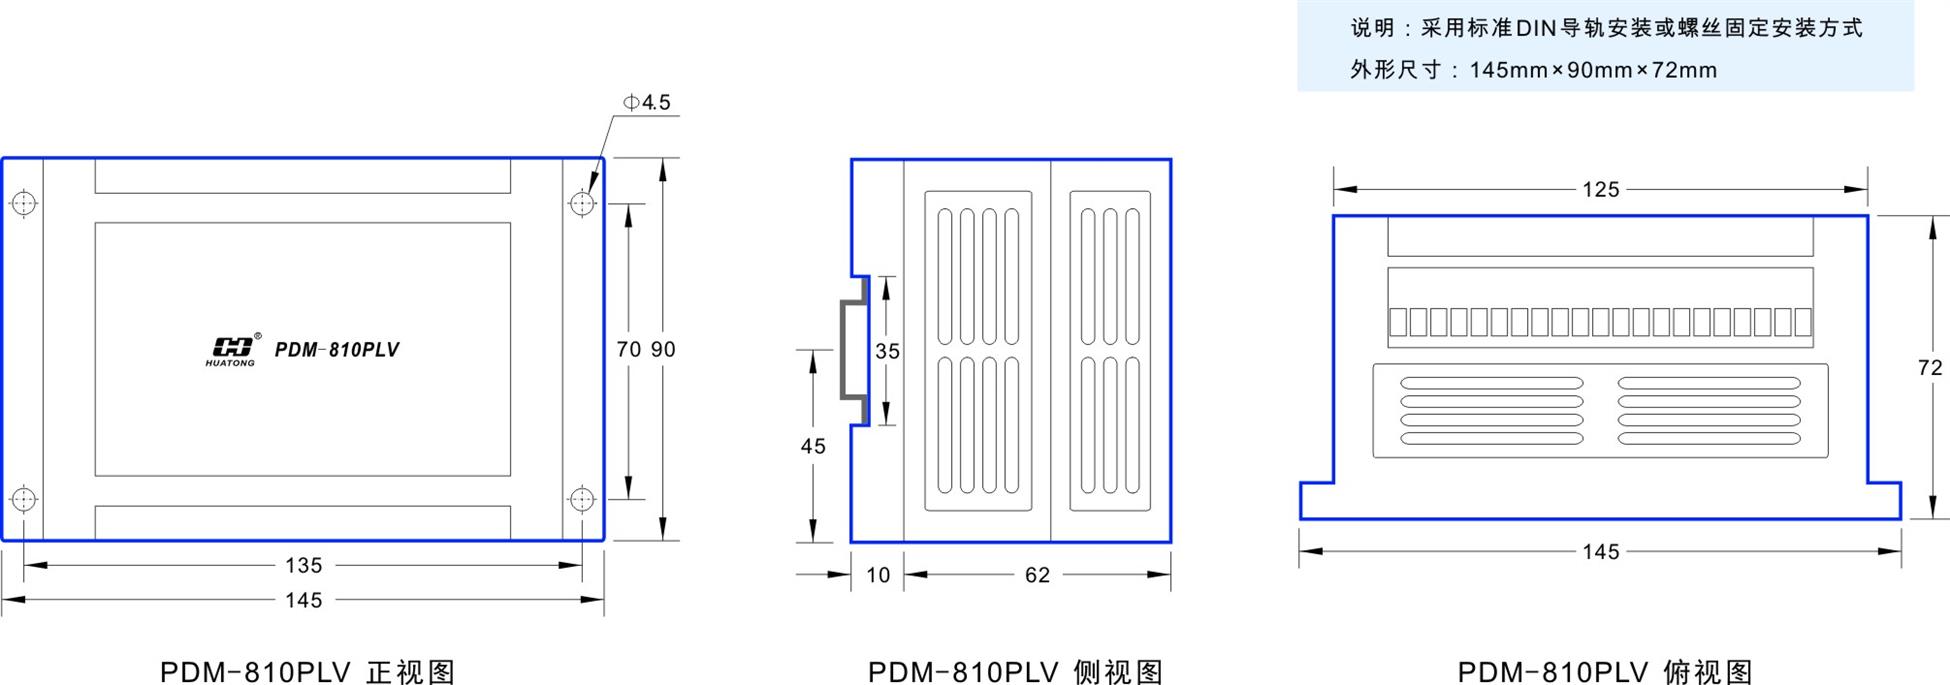 2-PDM-810PLV尺寸圖.jpg